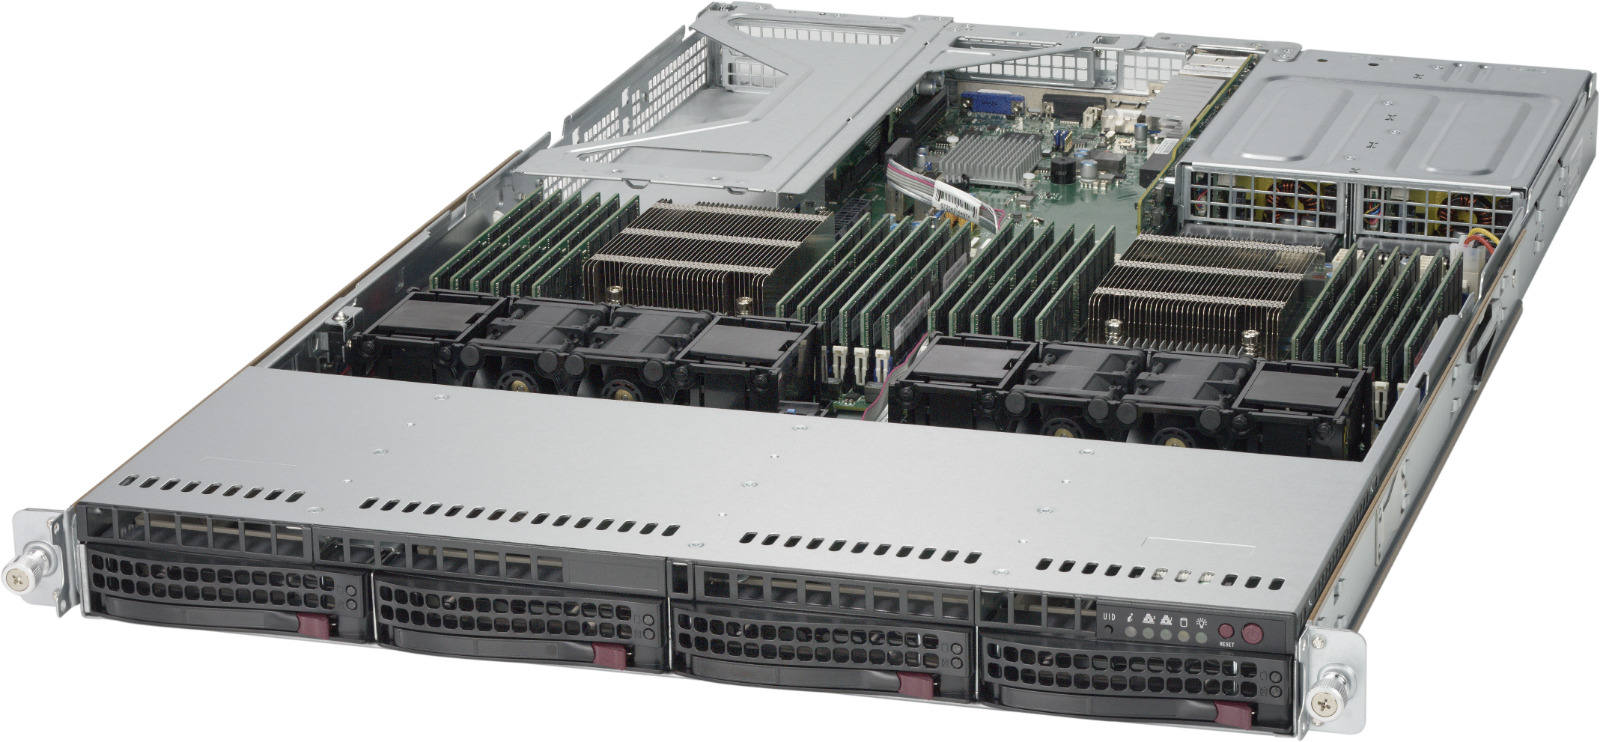 1U Supermicro Server X10DRU-i+ 2x Xeon E5-2690 V4 28 Cores 64GB 4x 10GBE-T 2PS